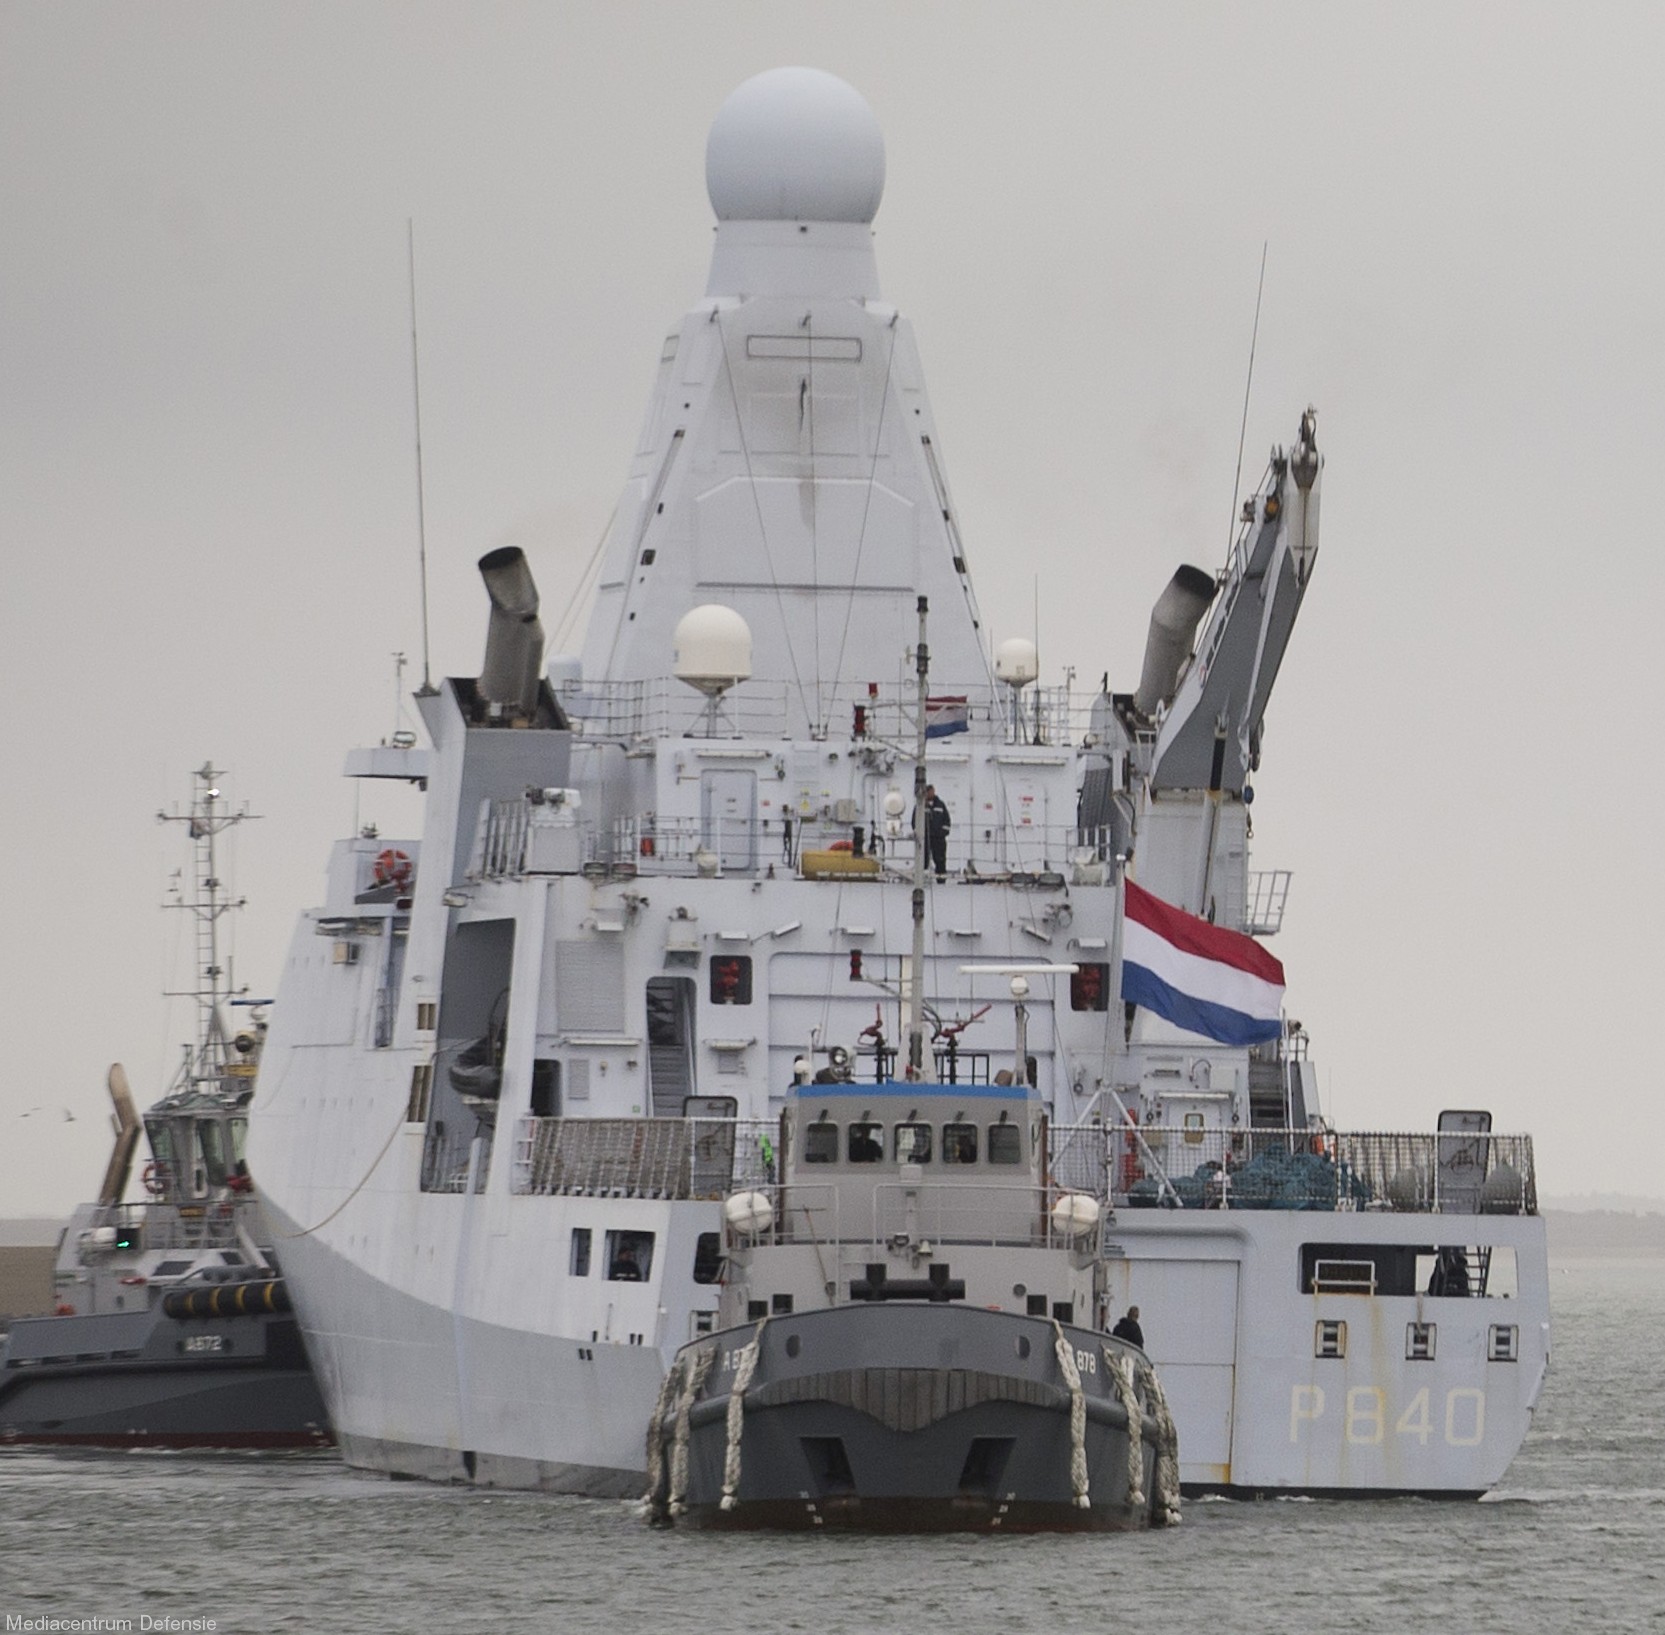 p-840 hnlms holland offshore patrol vessel opv royal netherlands navy 05